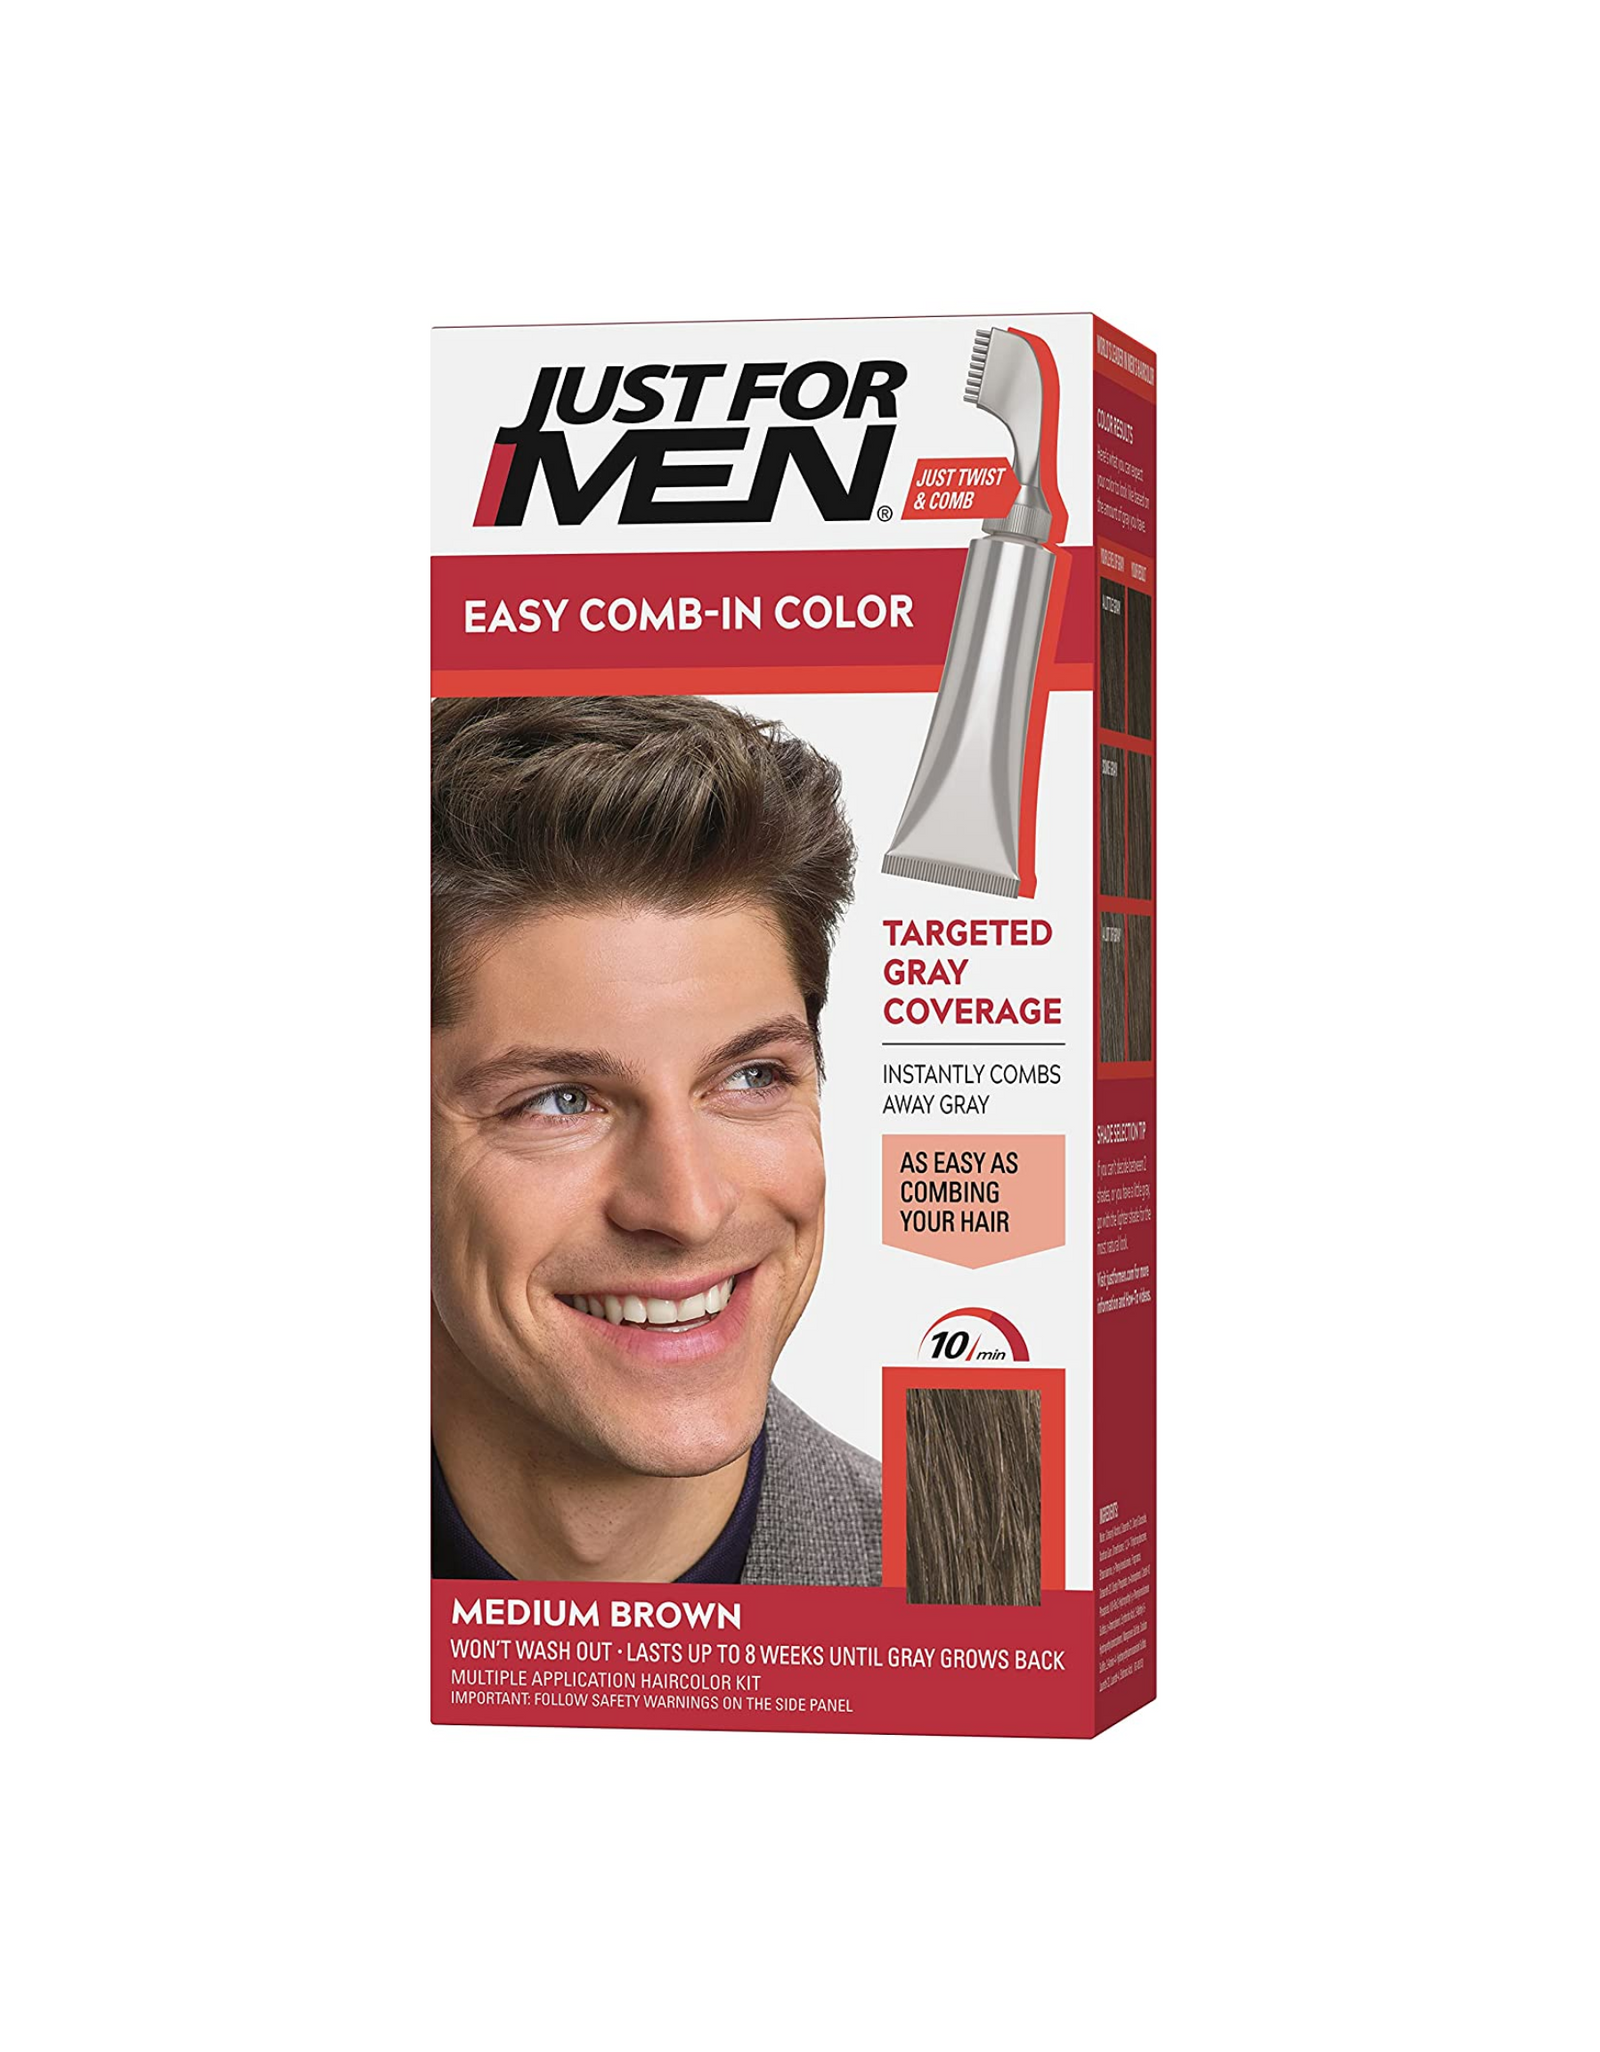 Just For Men Easy Comb-In Color Mens Hair Dye, Medium Brown, 1 Ct (Pack of 1)